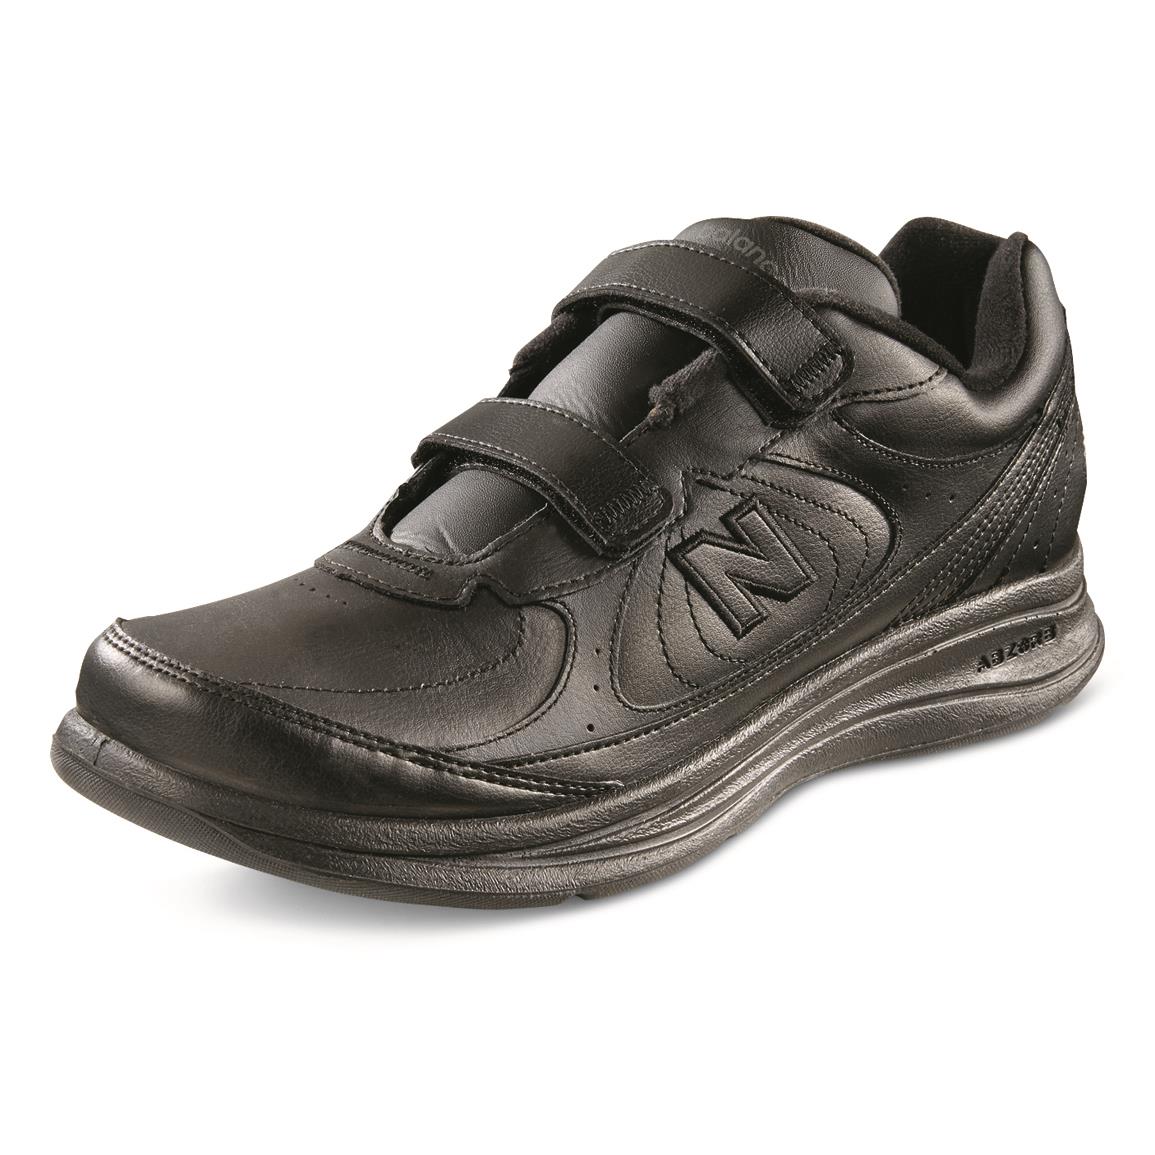 Buy > men's new balance walking shoes > in stock